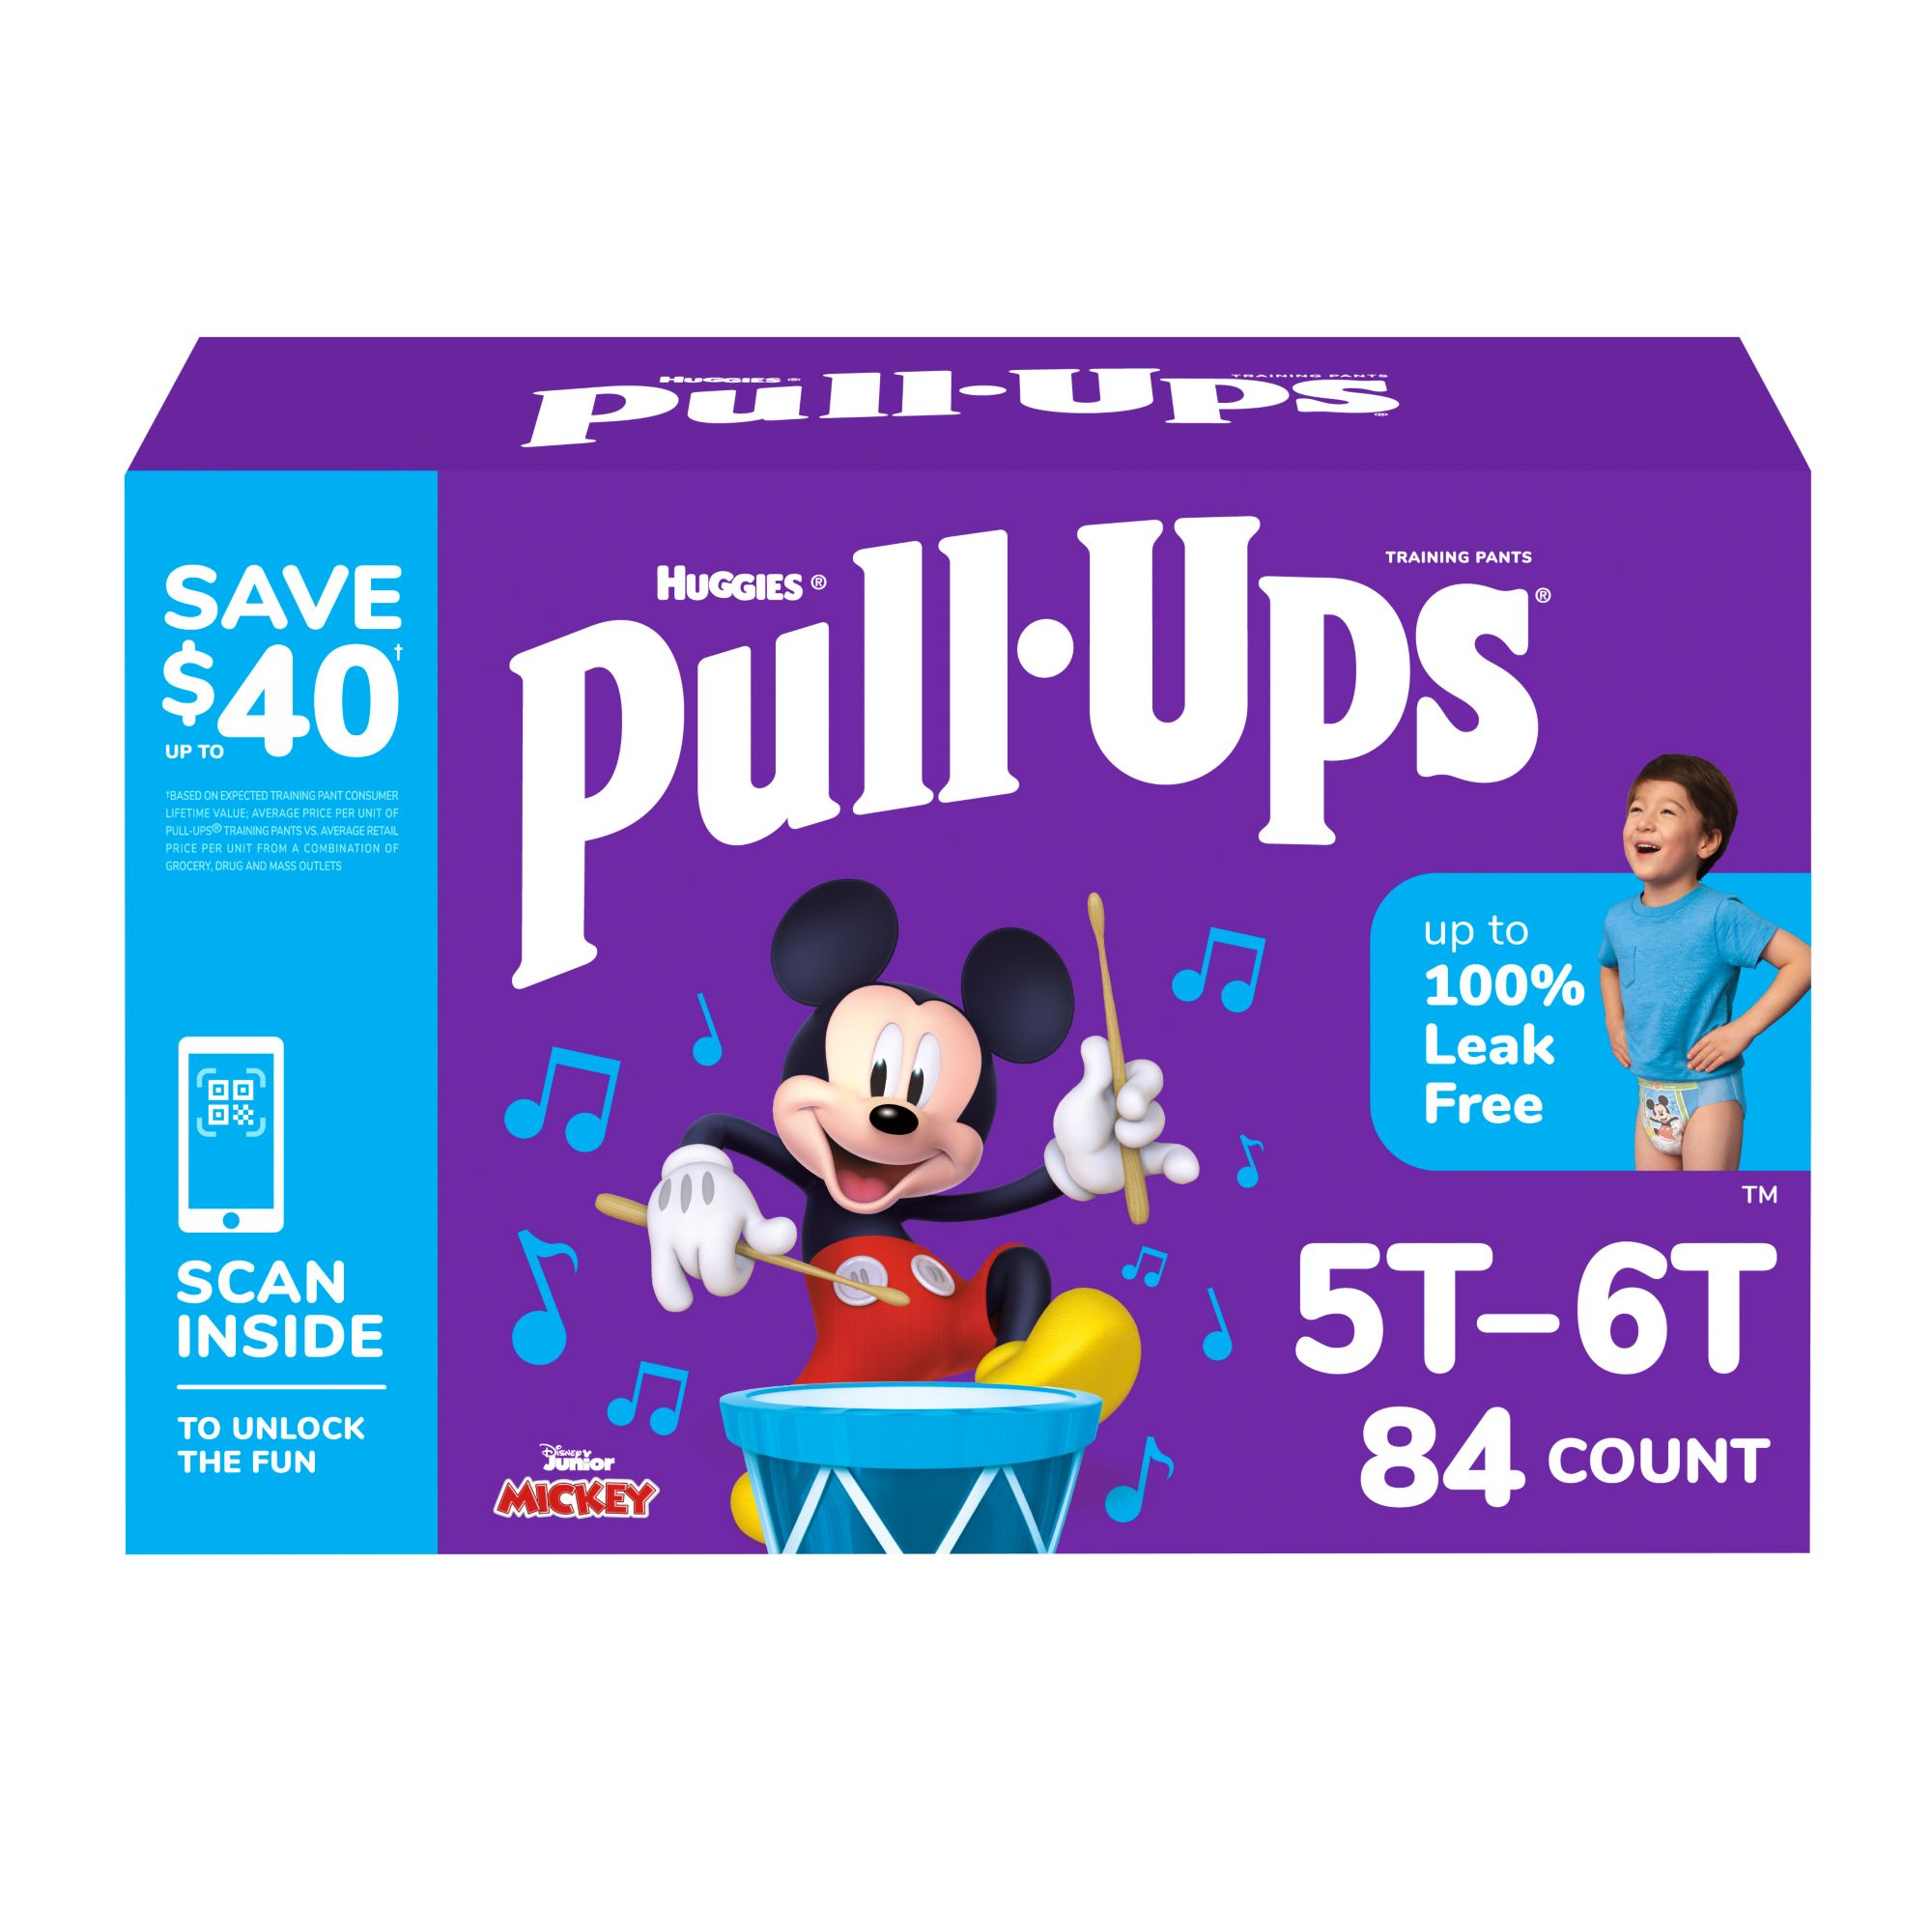 Huggies Pull-Ups Disney Learning Designs Training Pants Size 2T-3T - 26 CT